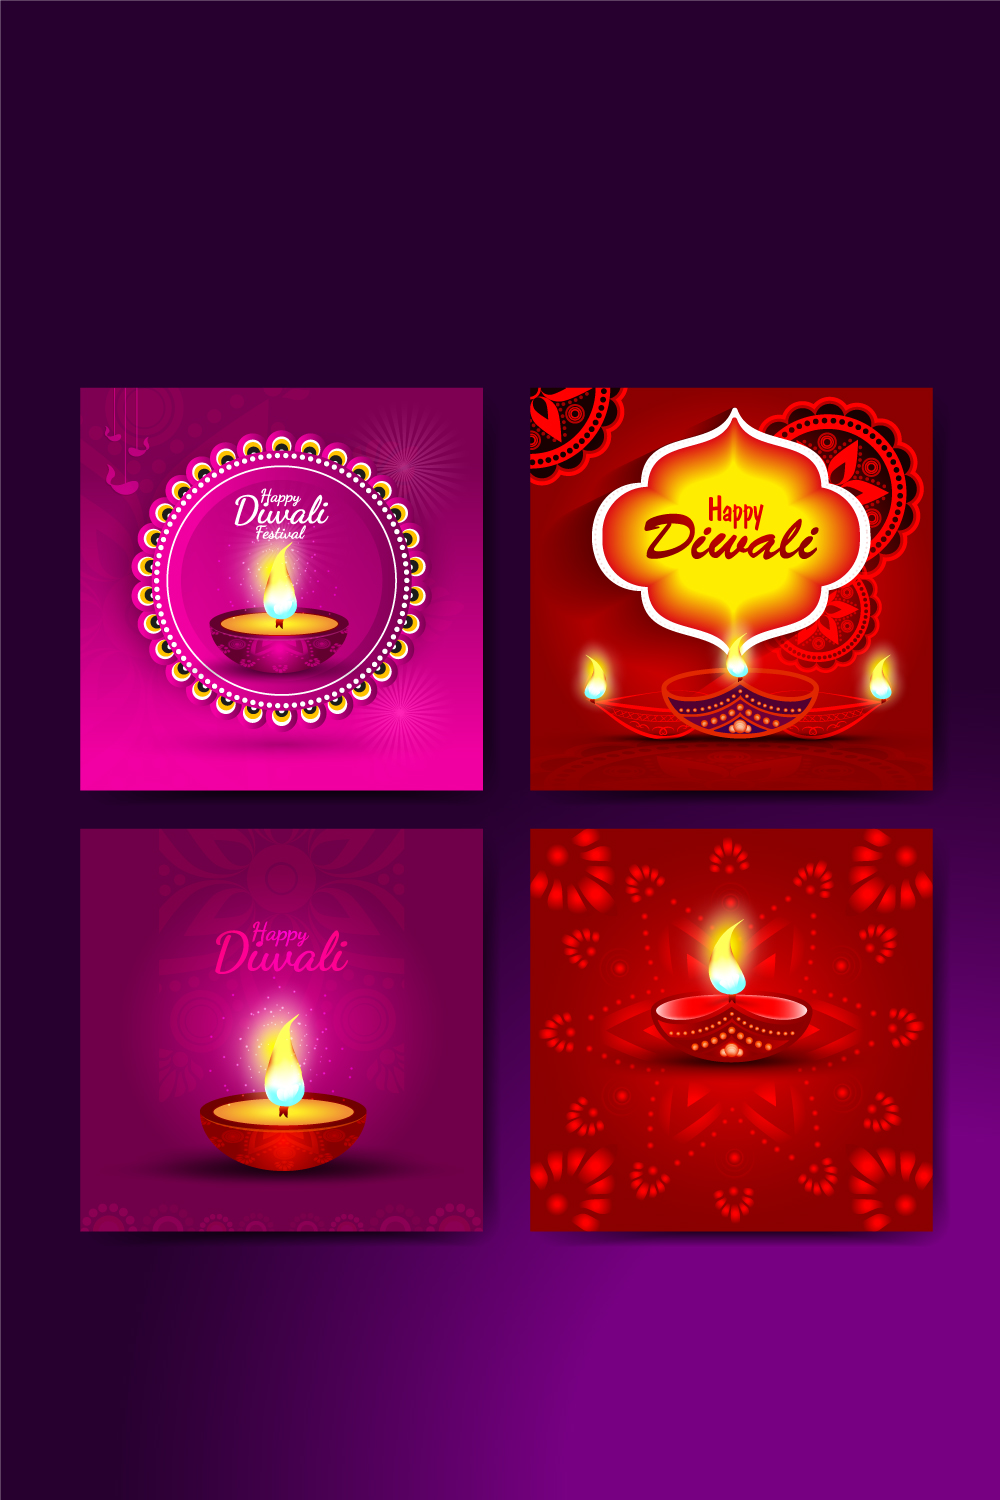 Happy Diwali Design pinterest preview image.